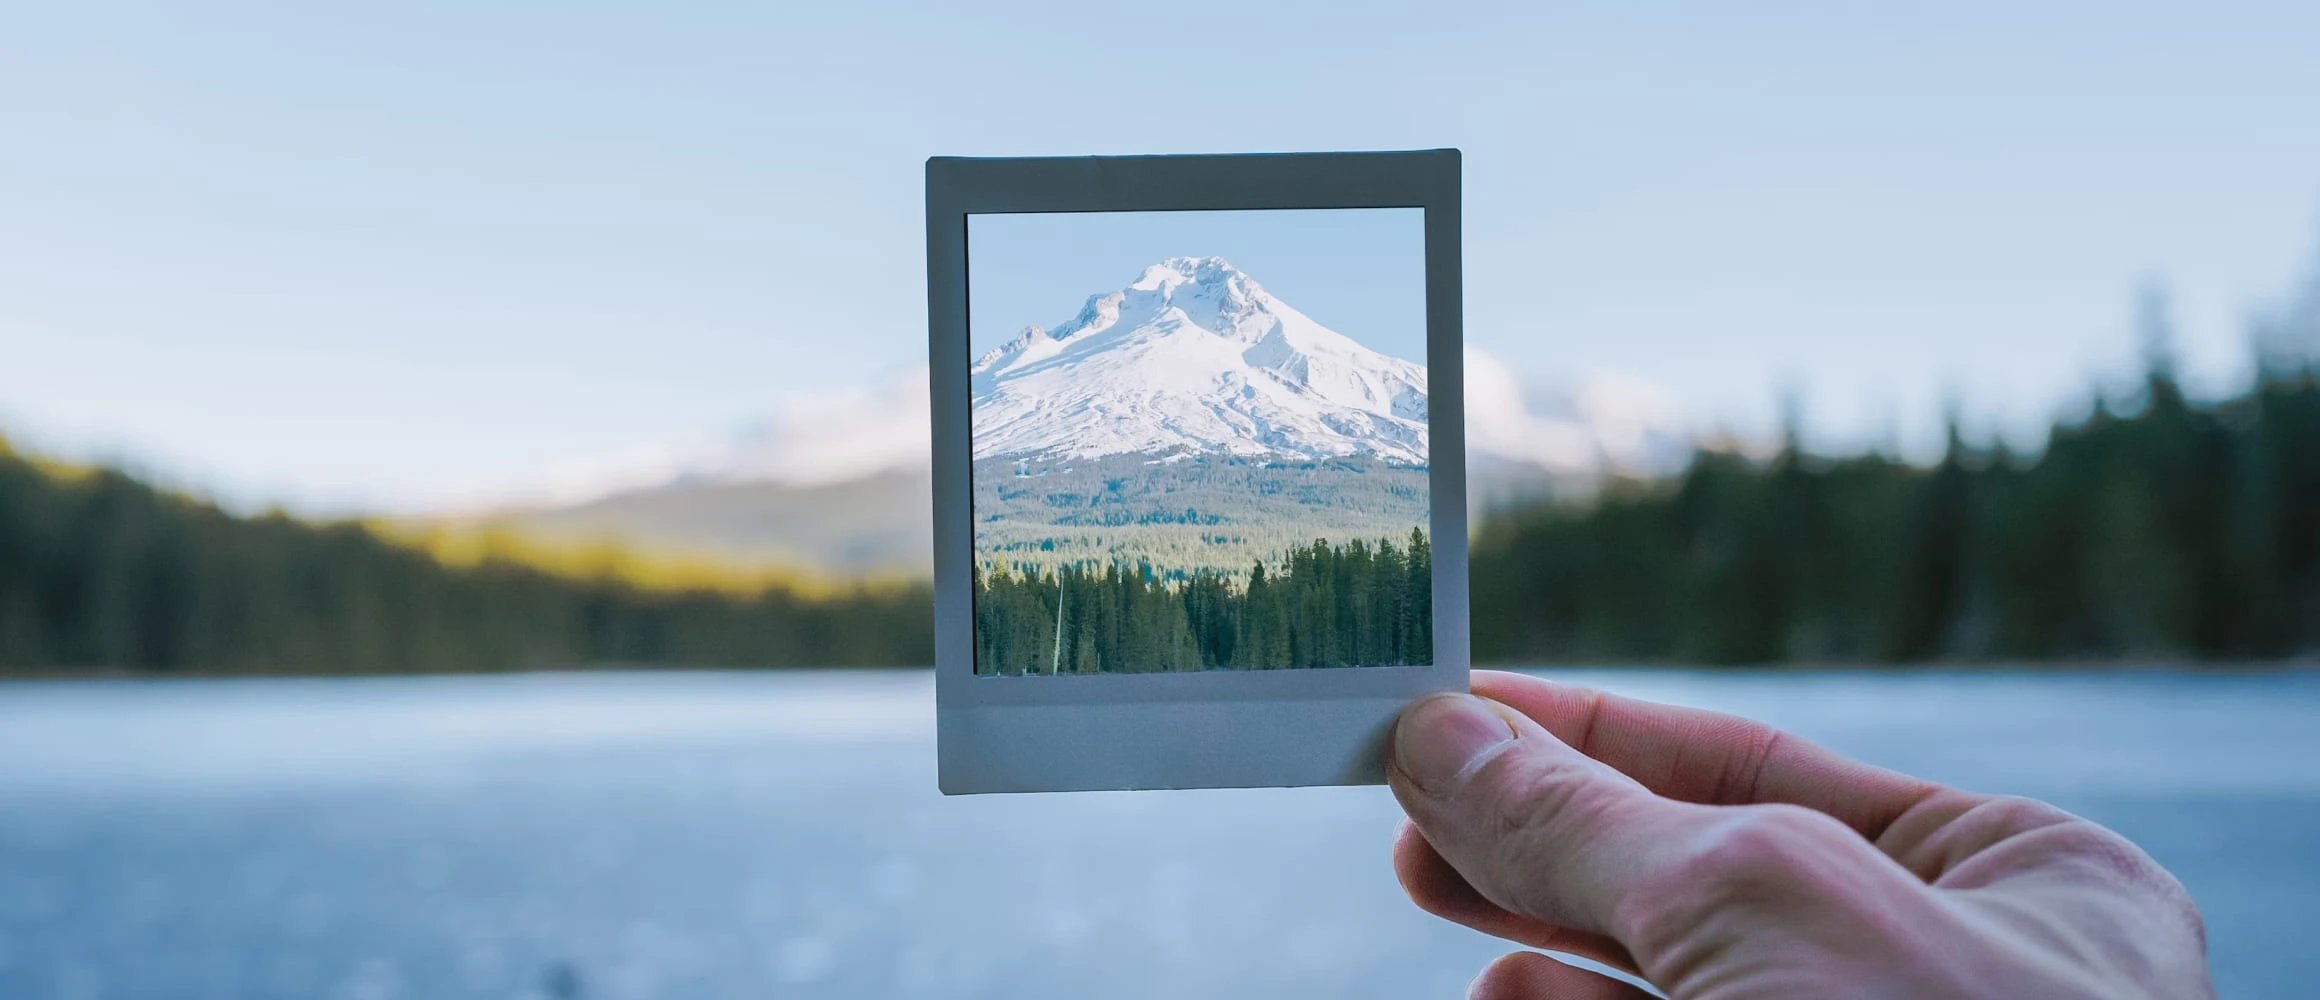 A man holding a polaroid of a snowy mountain